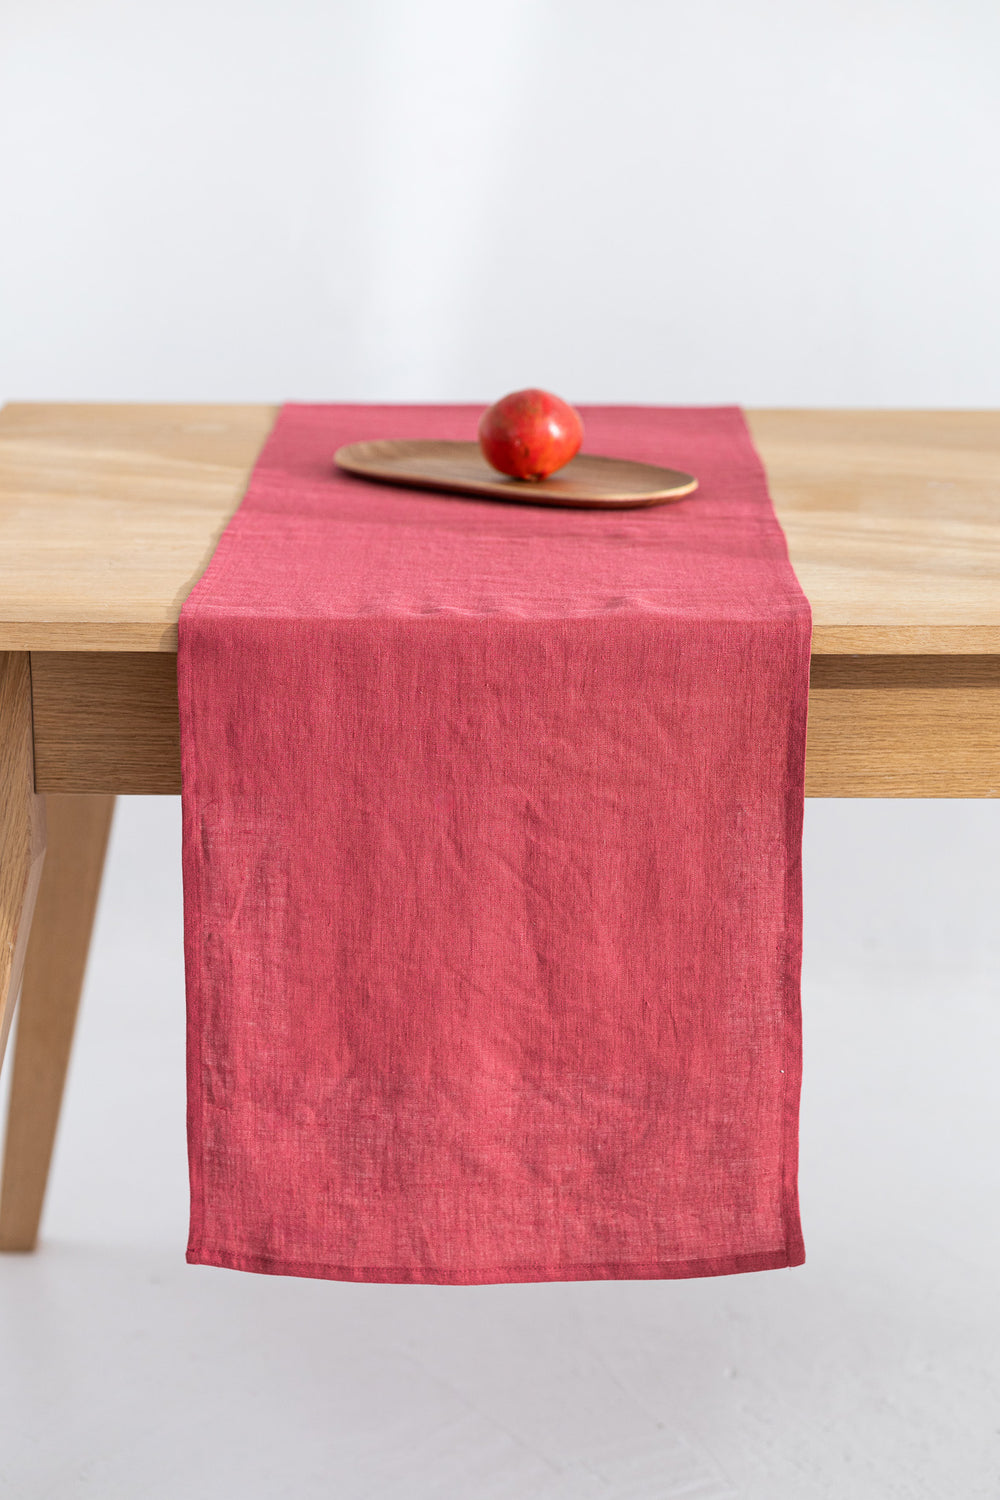 Linen Table Runner On Table In Raspberry Color 1 - Daily Linen